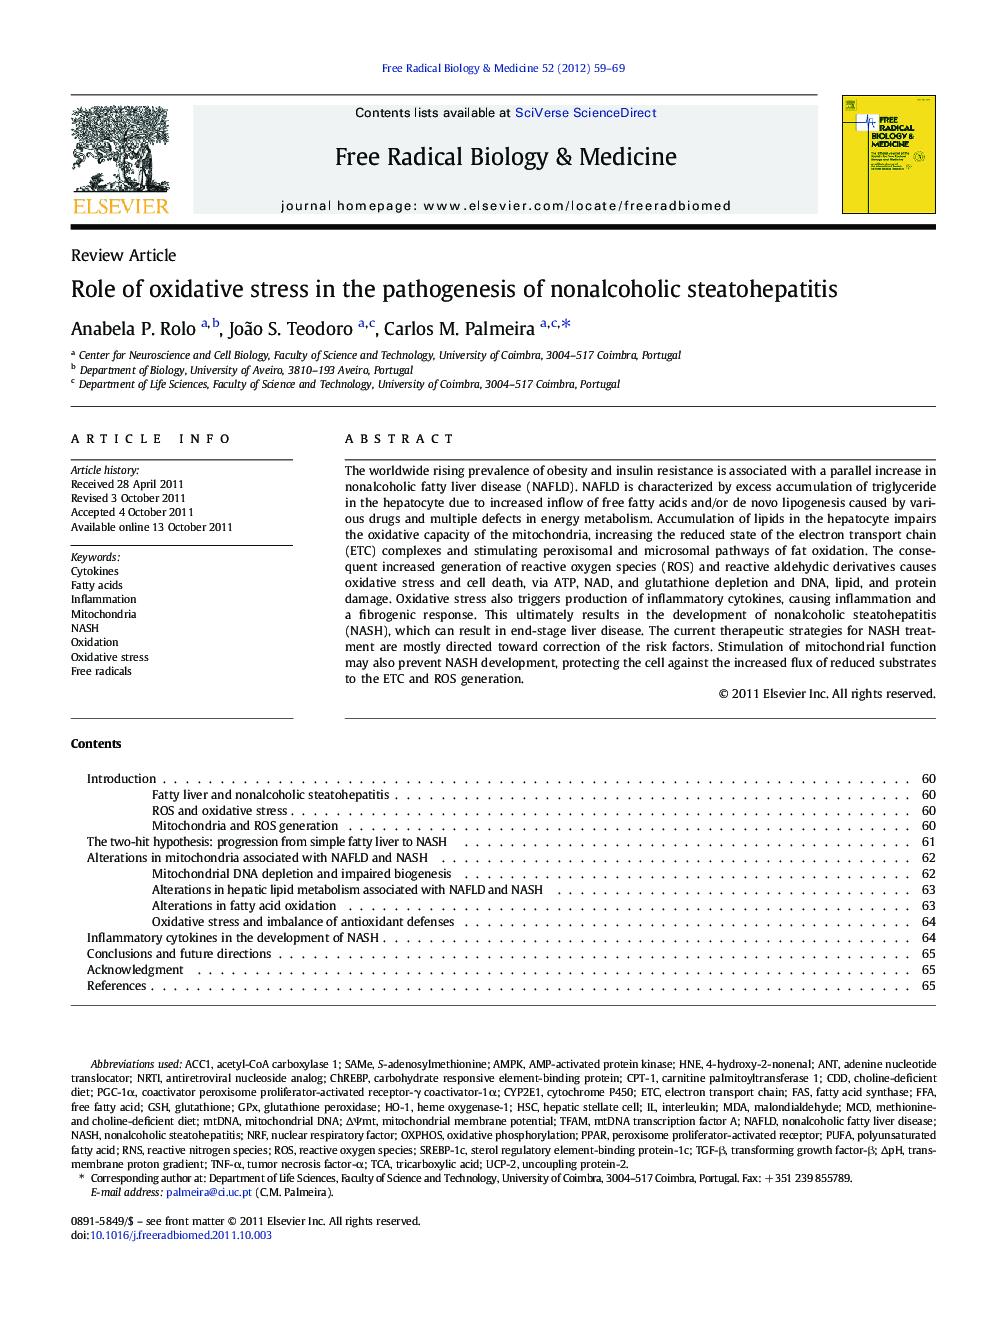 Role of oxidative stress in the pathogenesis of nonalcoholic steatohepatitis